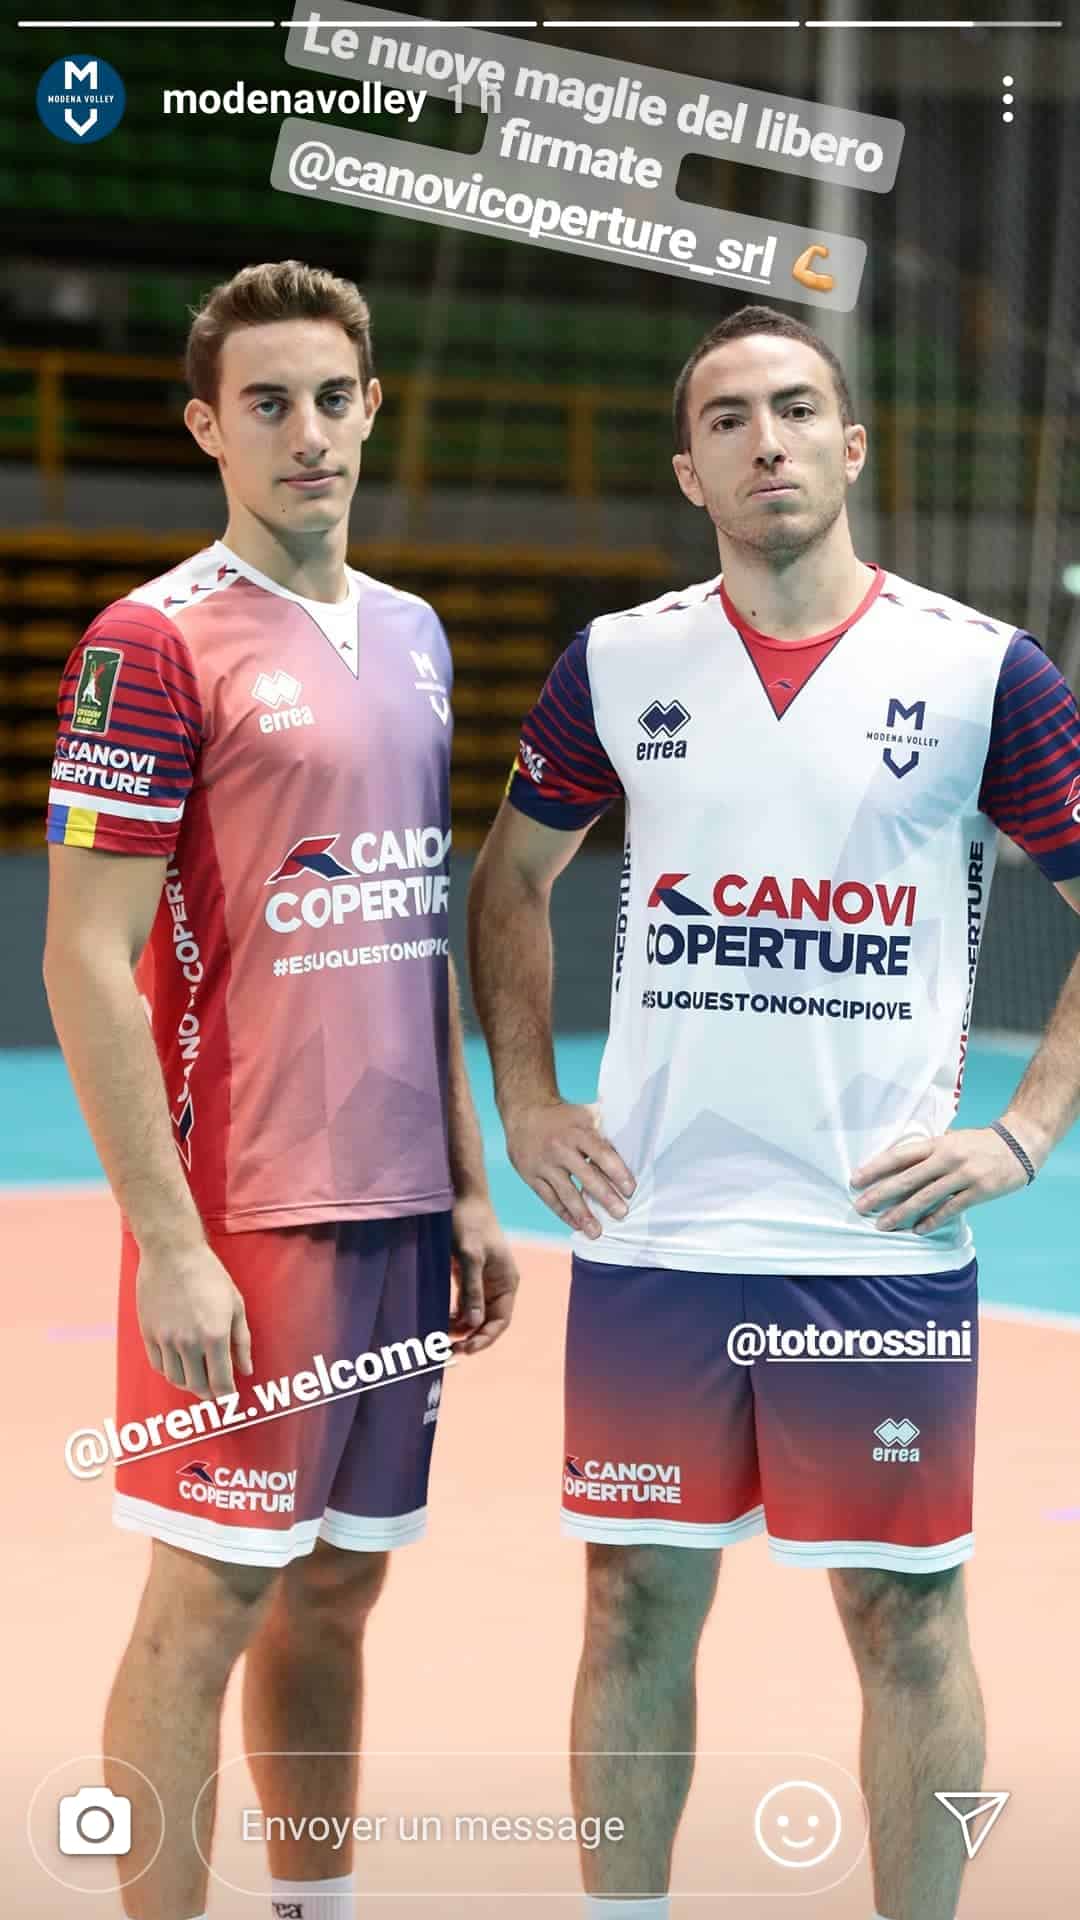 nouveau-maillot-volley-modena-italie-errea-2018-2019-6